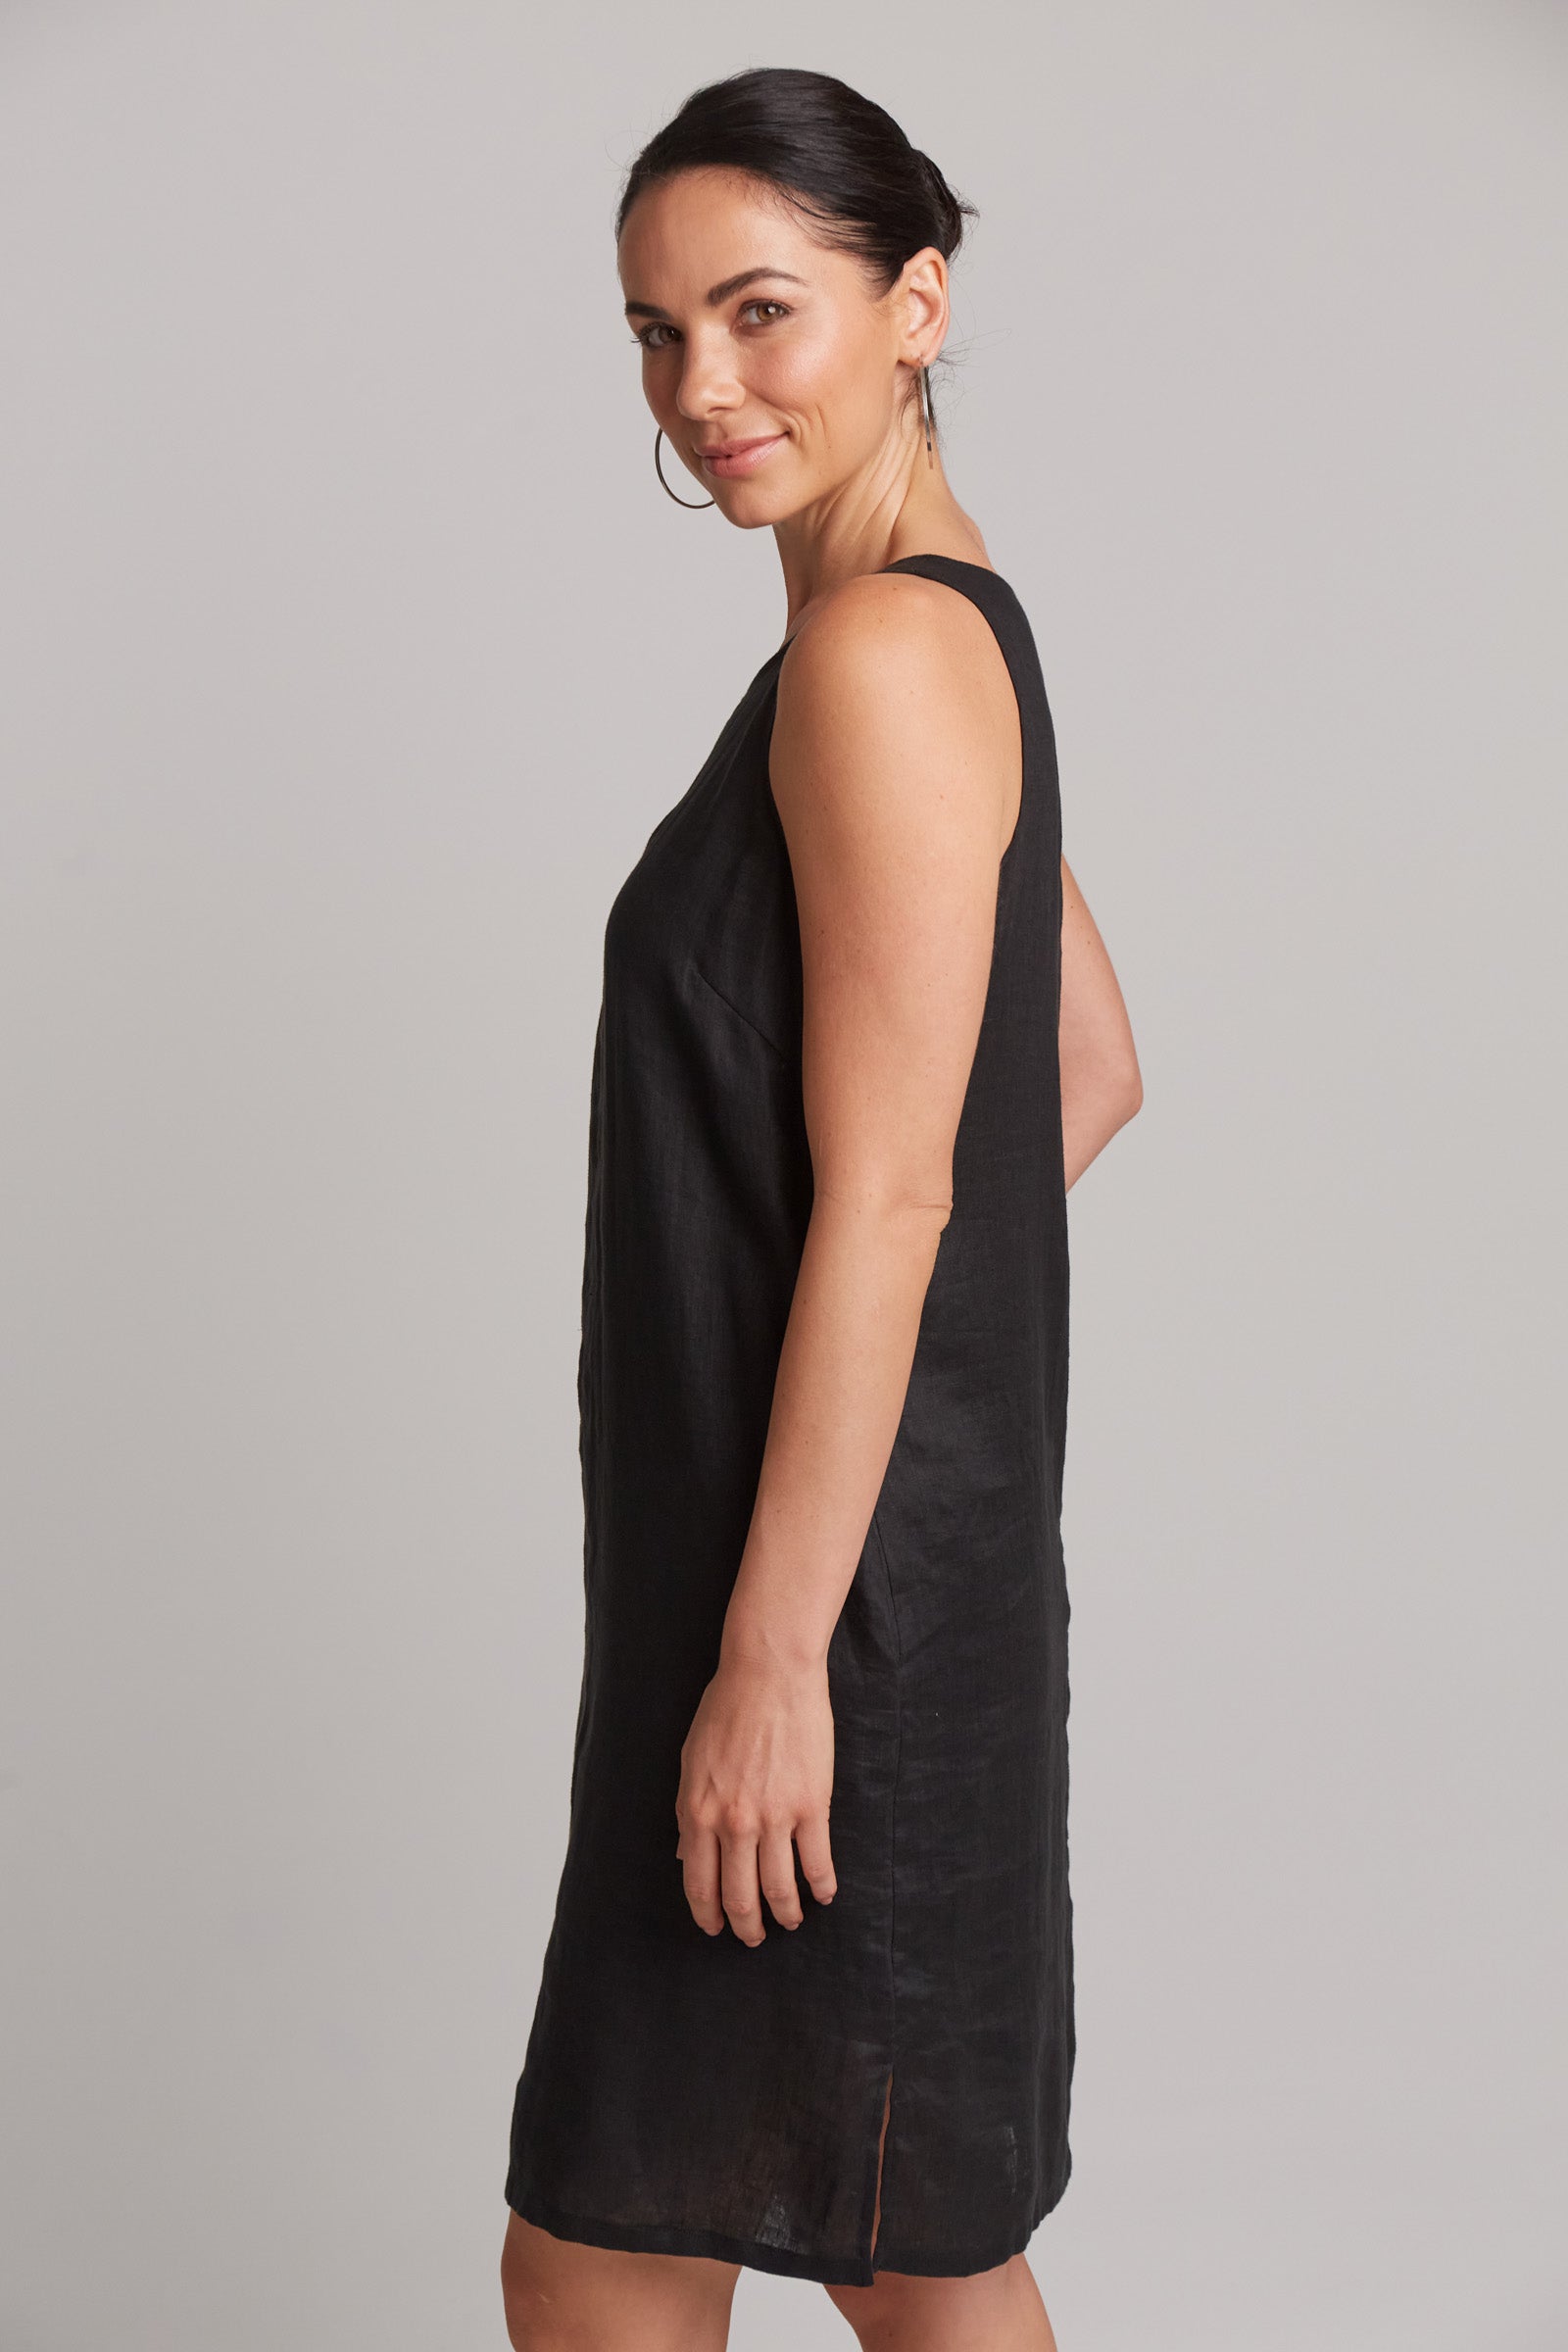 Studio Midi Dress - Ebony - eb&ive Clothing - Dress Mid Linen